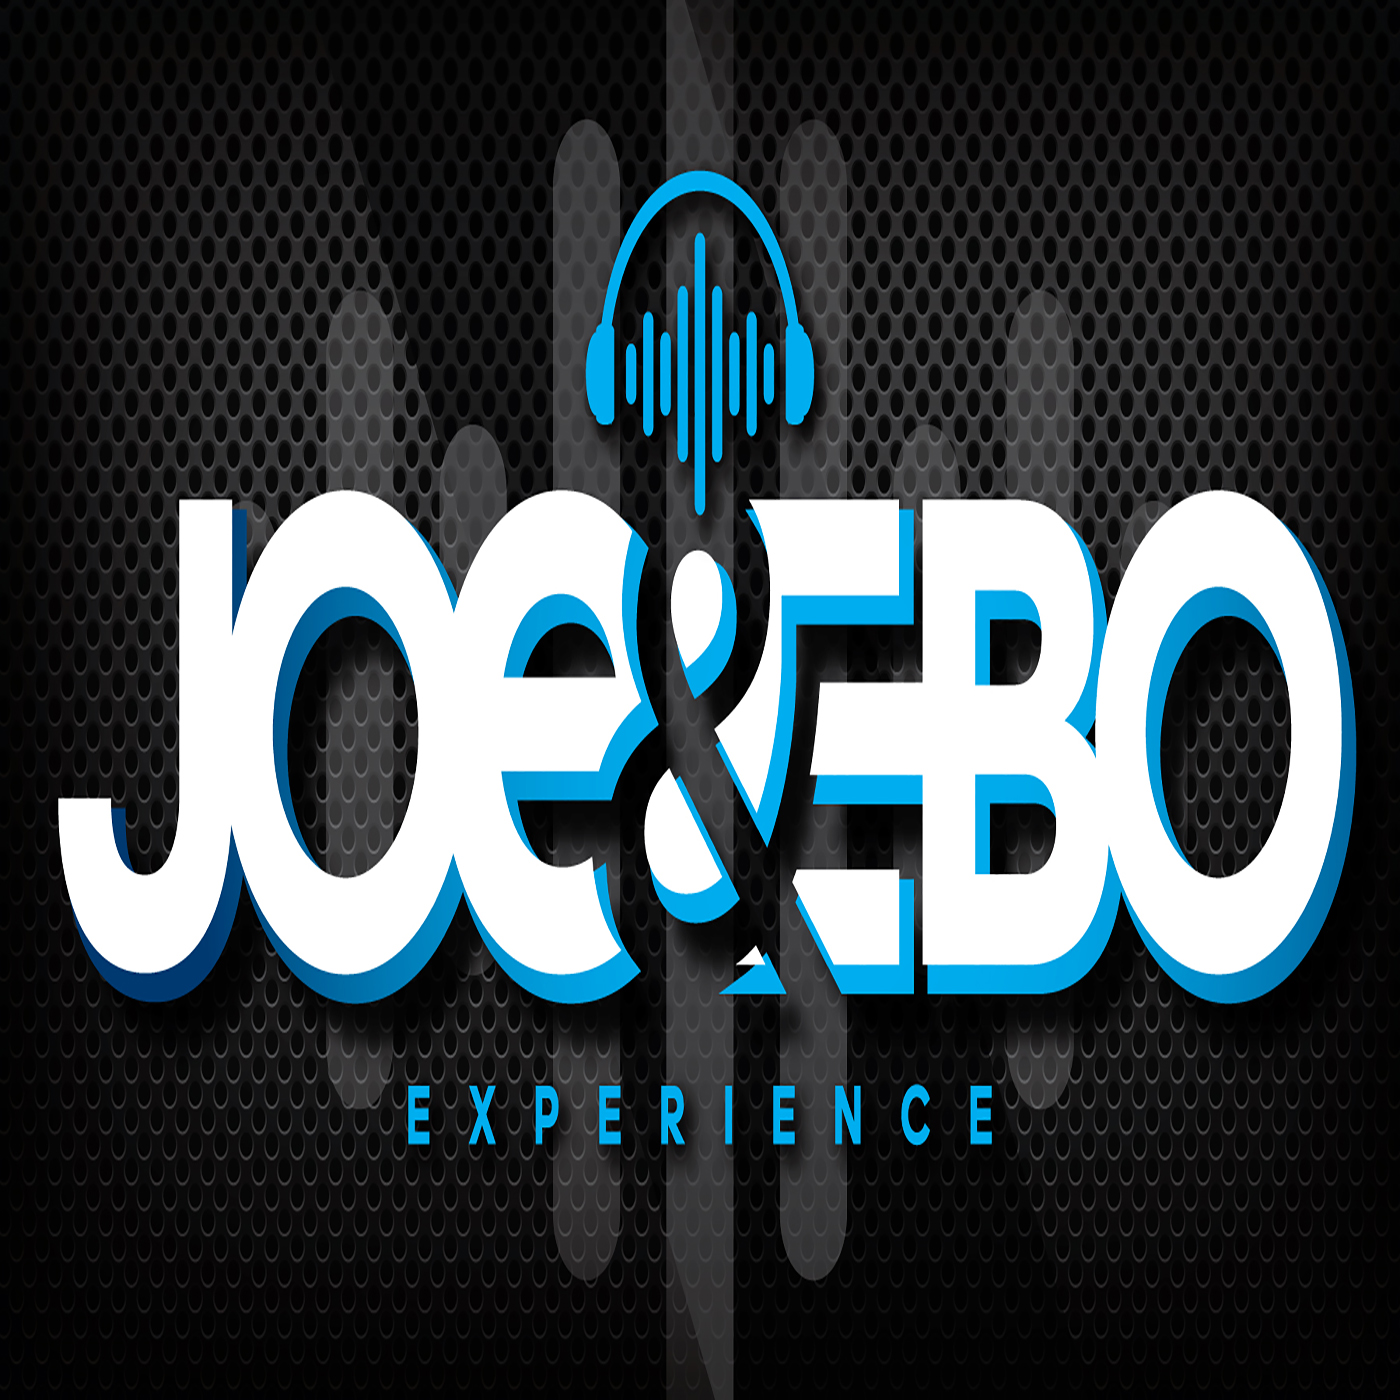 Joe & Ebo Experience: NFL Schedule Released